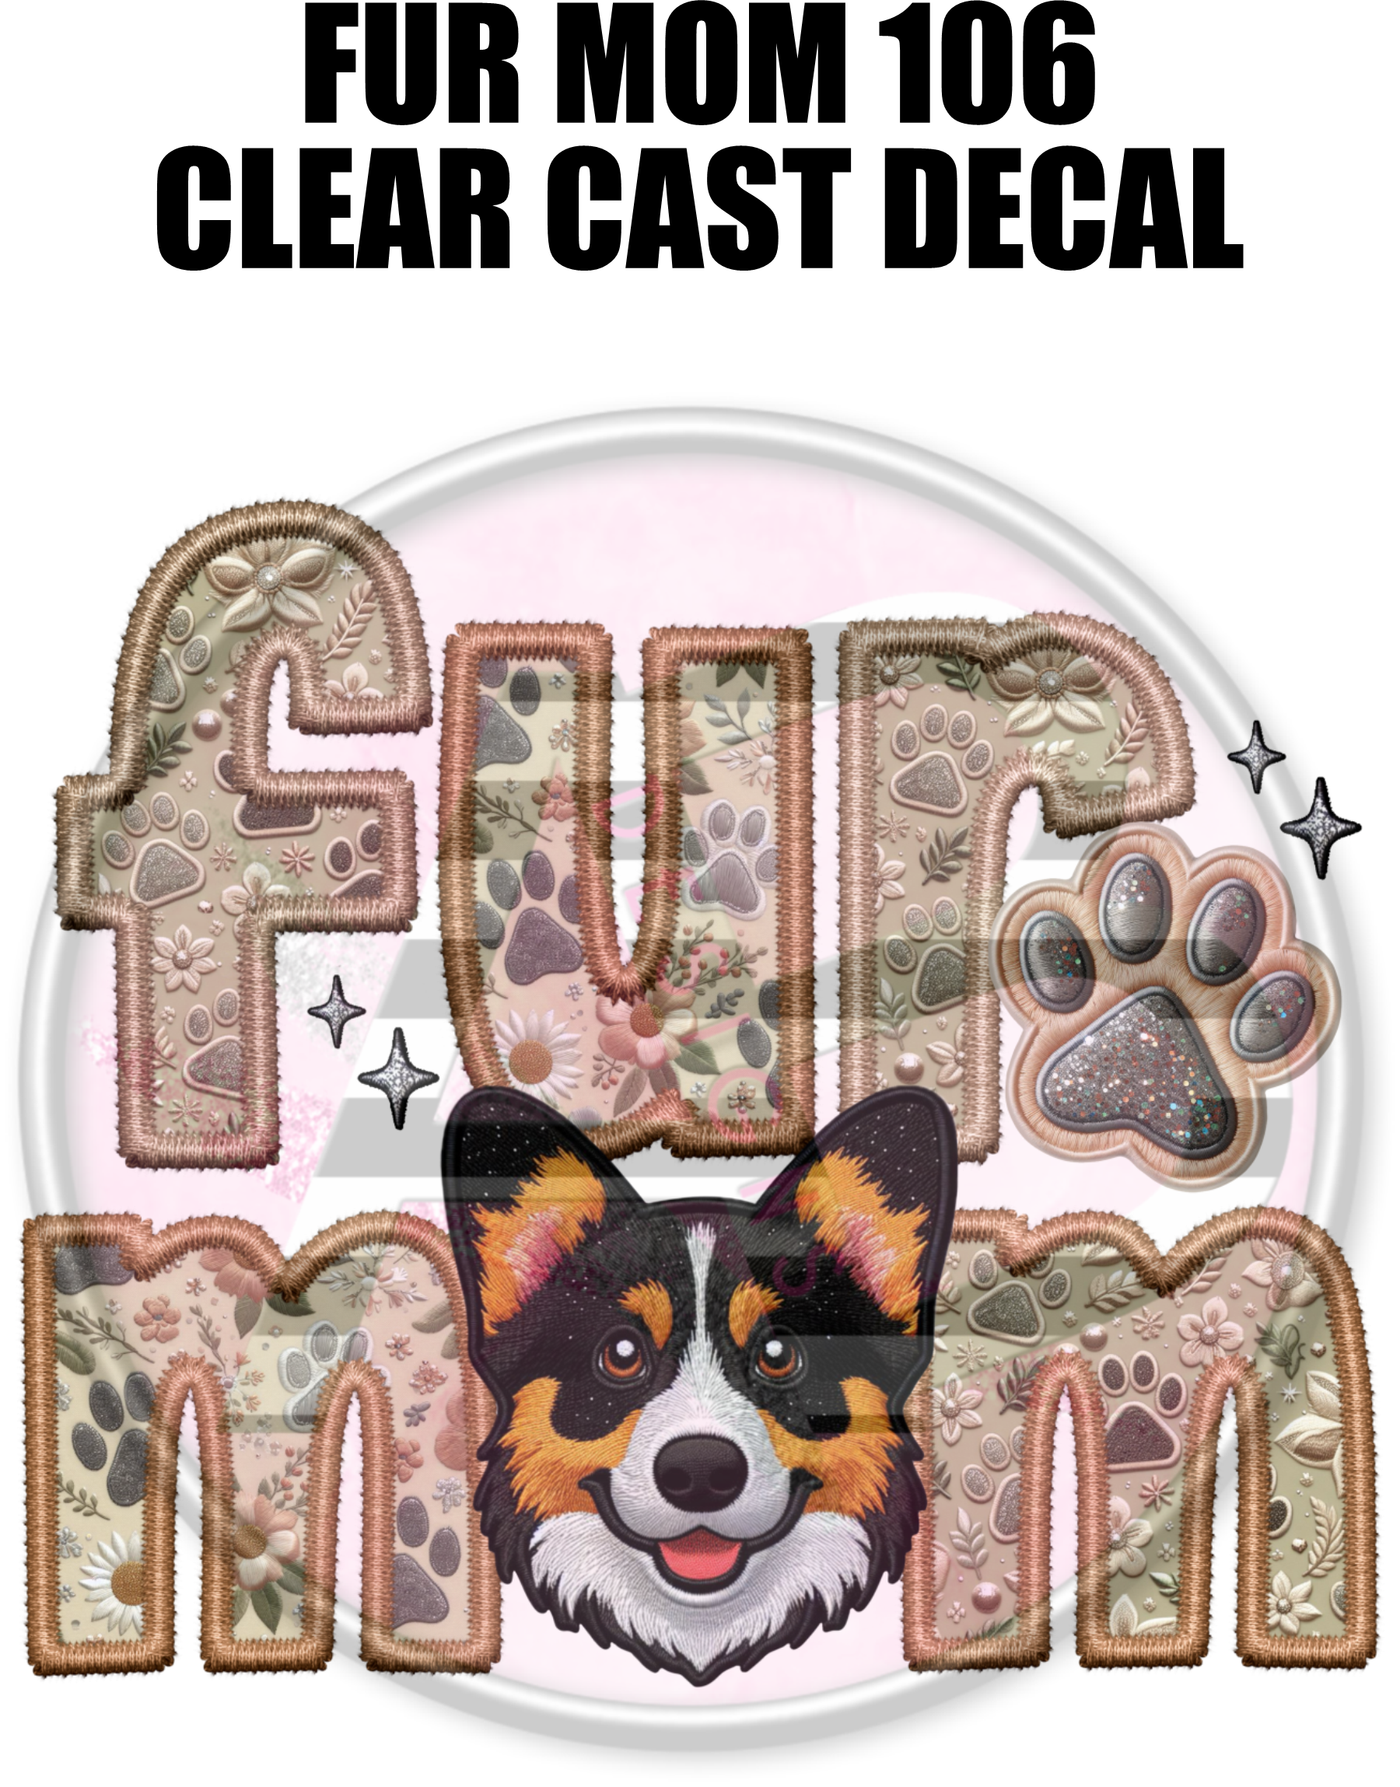 Fur Mom 106 - Clear Cast Decal